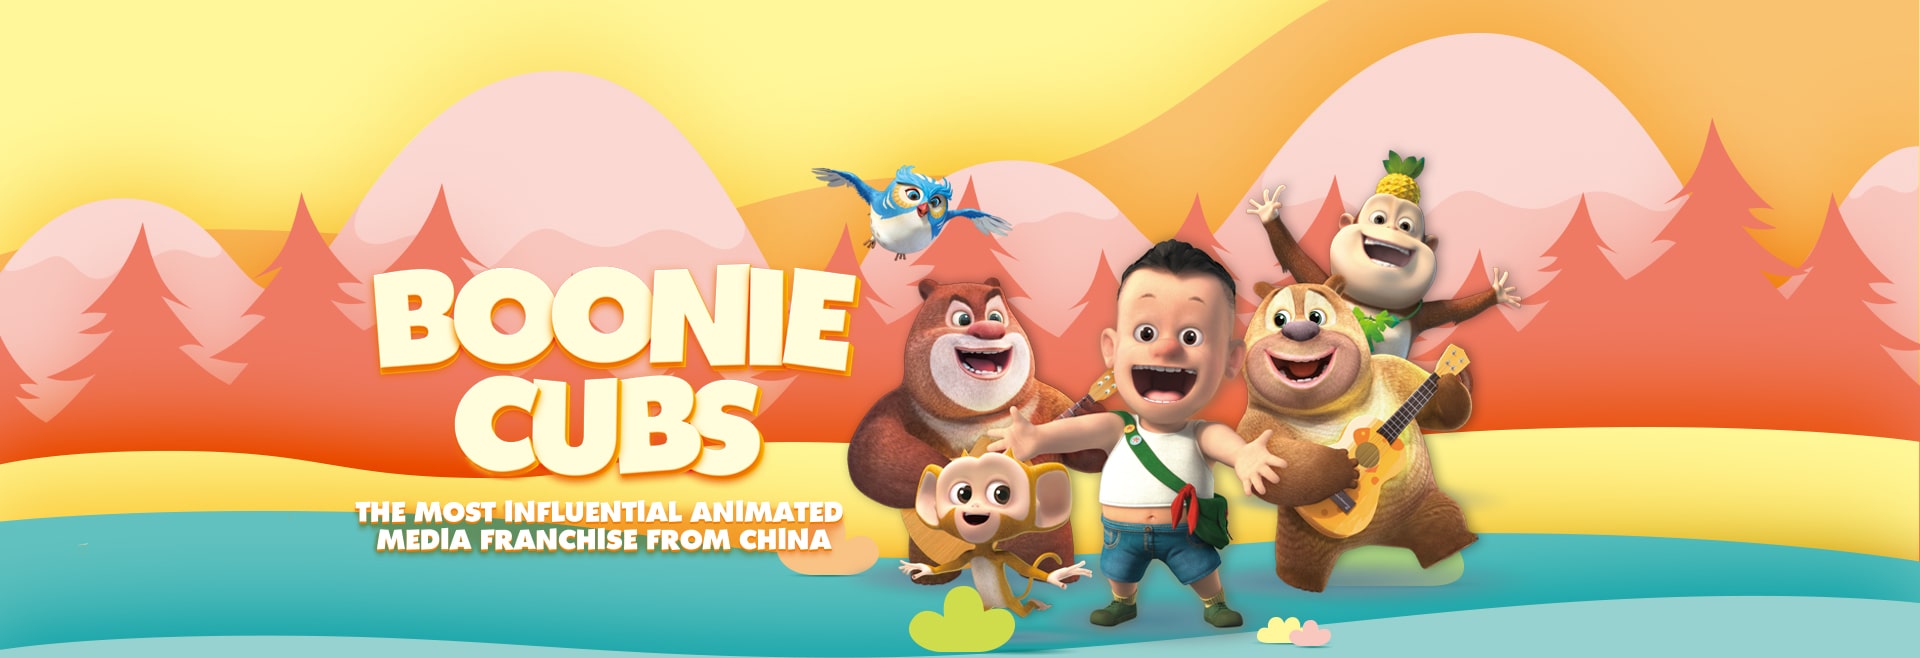 Boonie Cubs brand